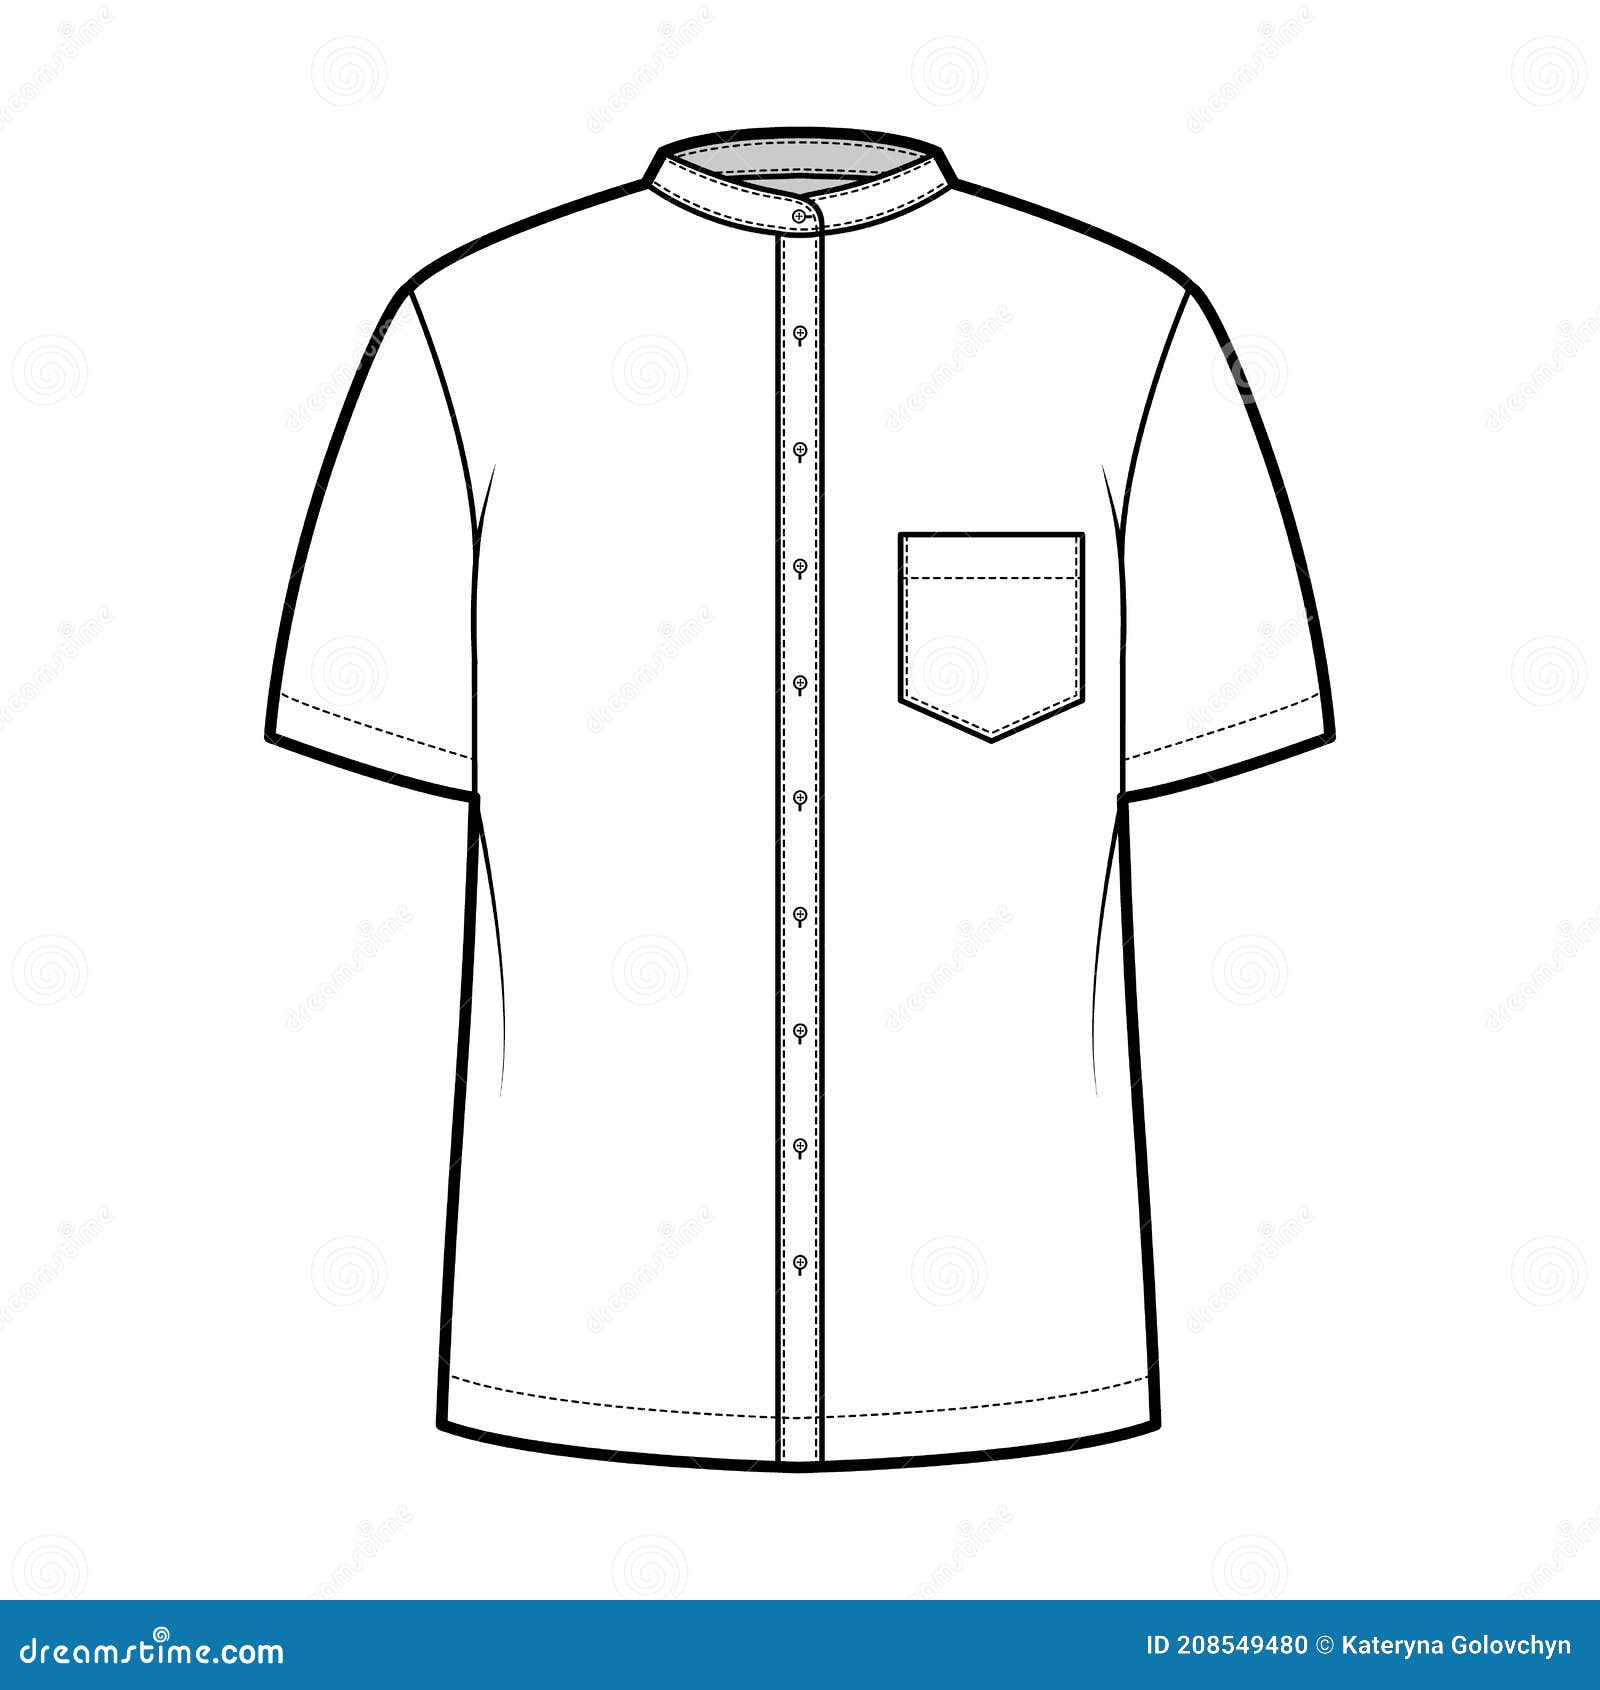 Premium Vector  Mandarin blouse illustration design flat drawing fashion  flat sketches